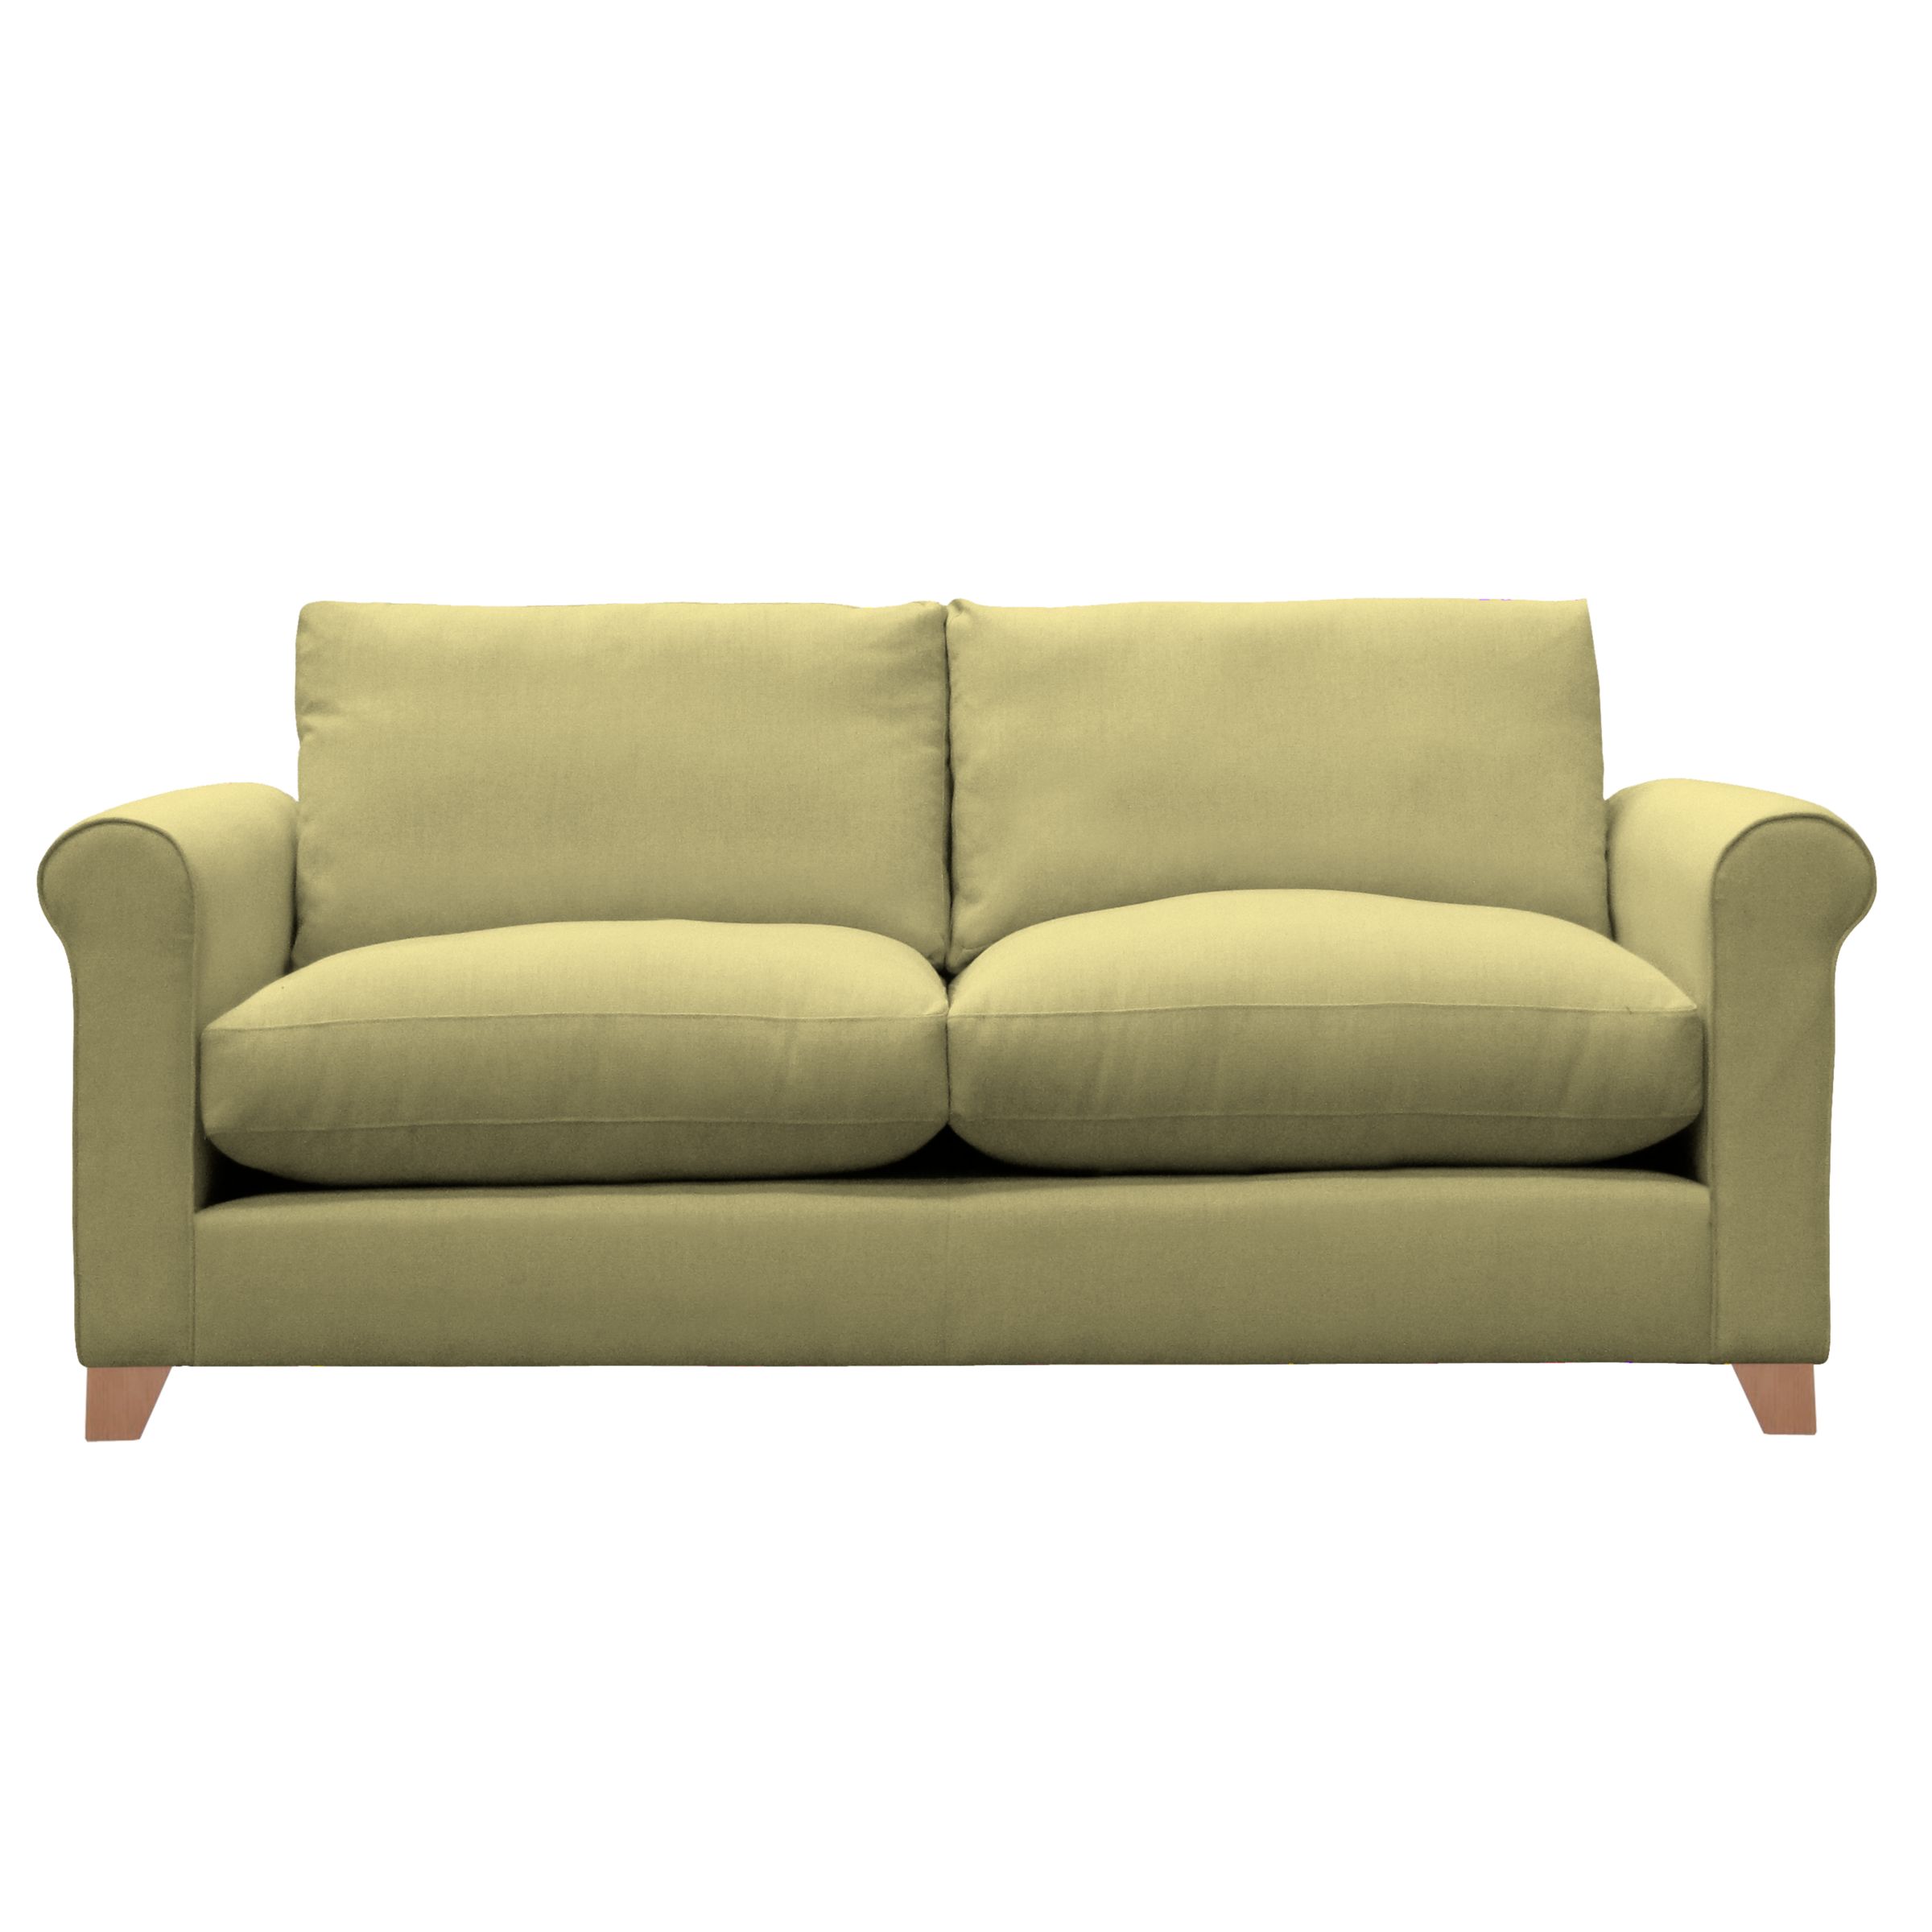 John Lewis Options Scroll Arm Large Sofa, Linley Sage, width 192cm